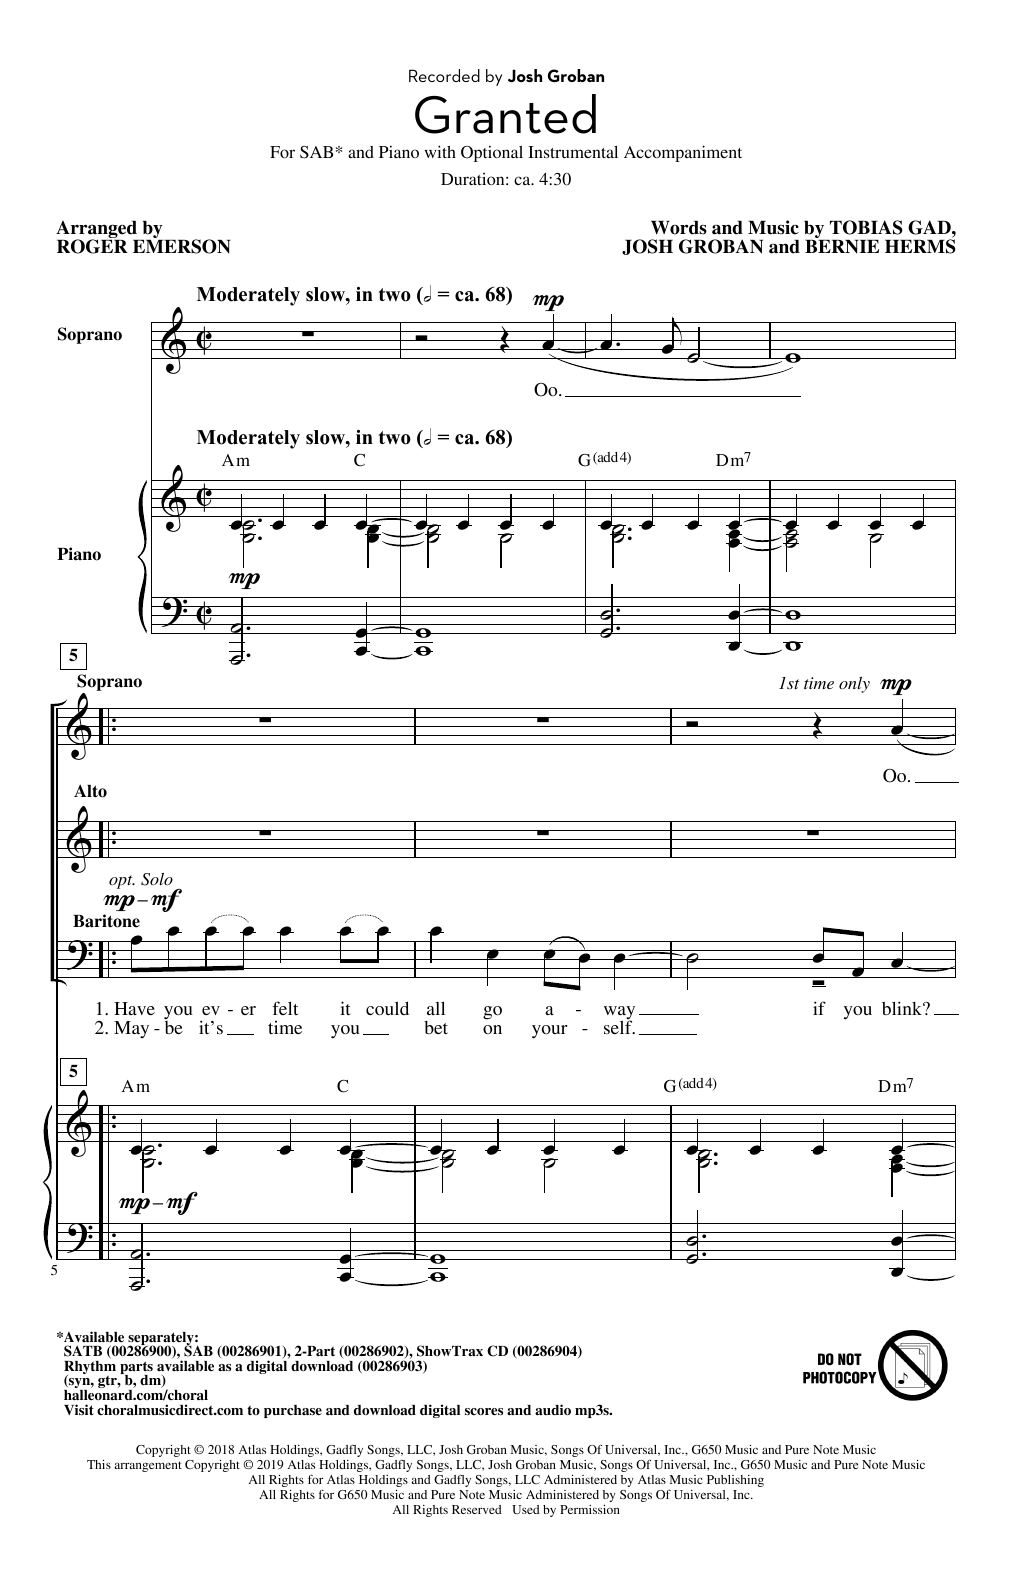 Josh Groban Granted (arr. Roger Emerson) Sheet Music Notes & Chords for SATB Choir - Download or Print PDF